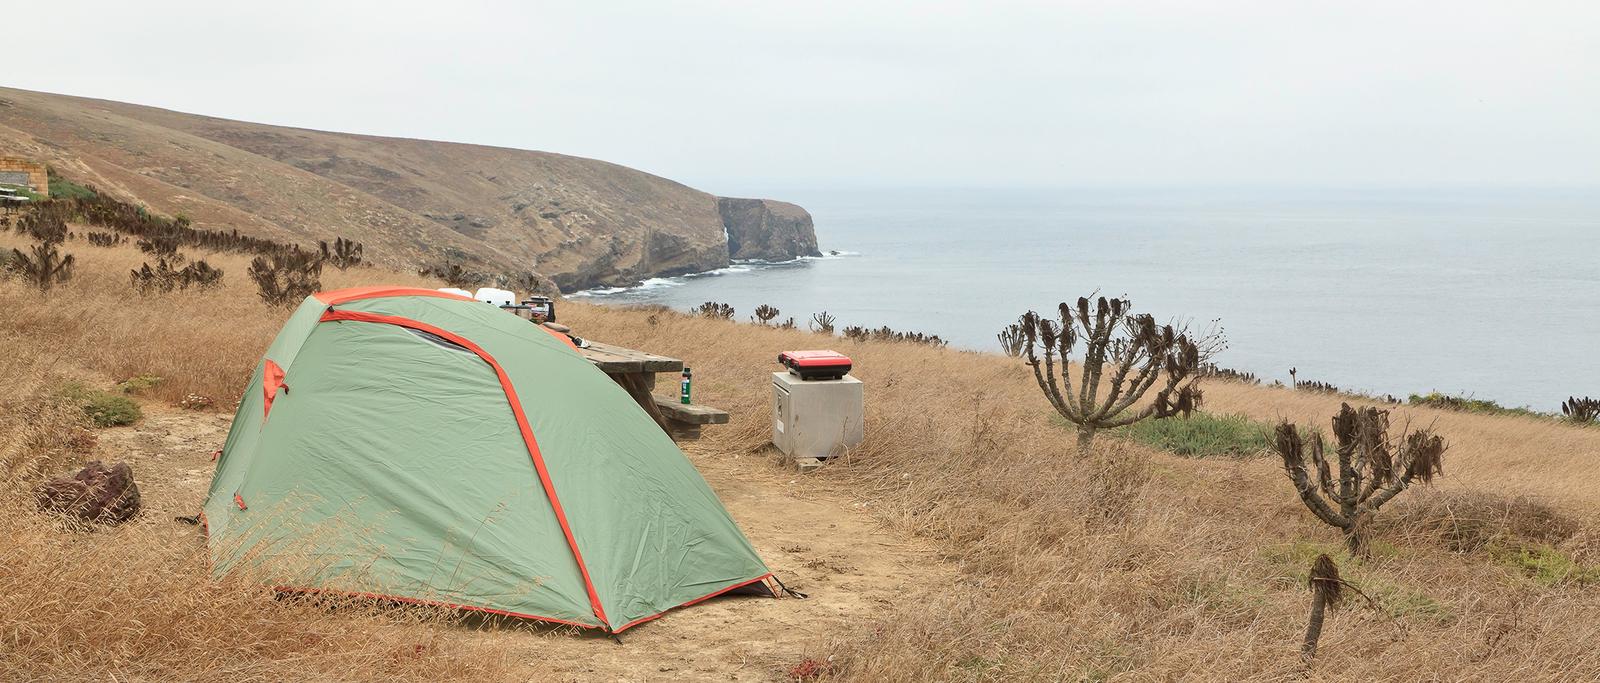 Tent sitting in dried grass on a ocean bluff overlooking the coastlineSANTA BARBARA ISLAND 